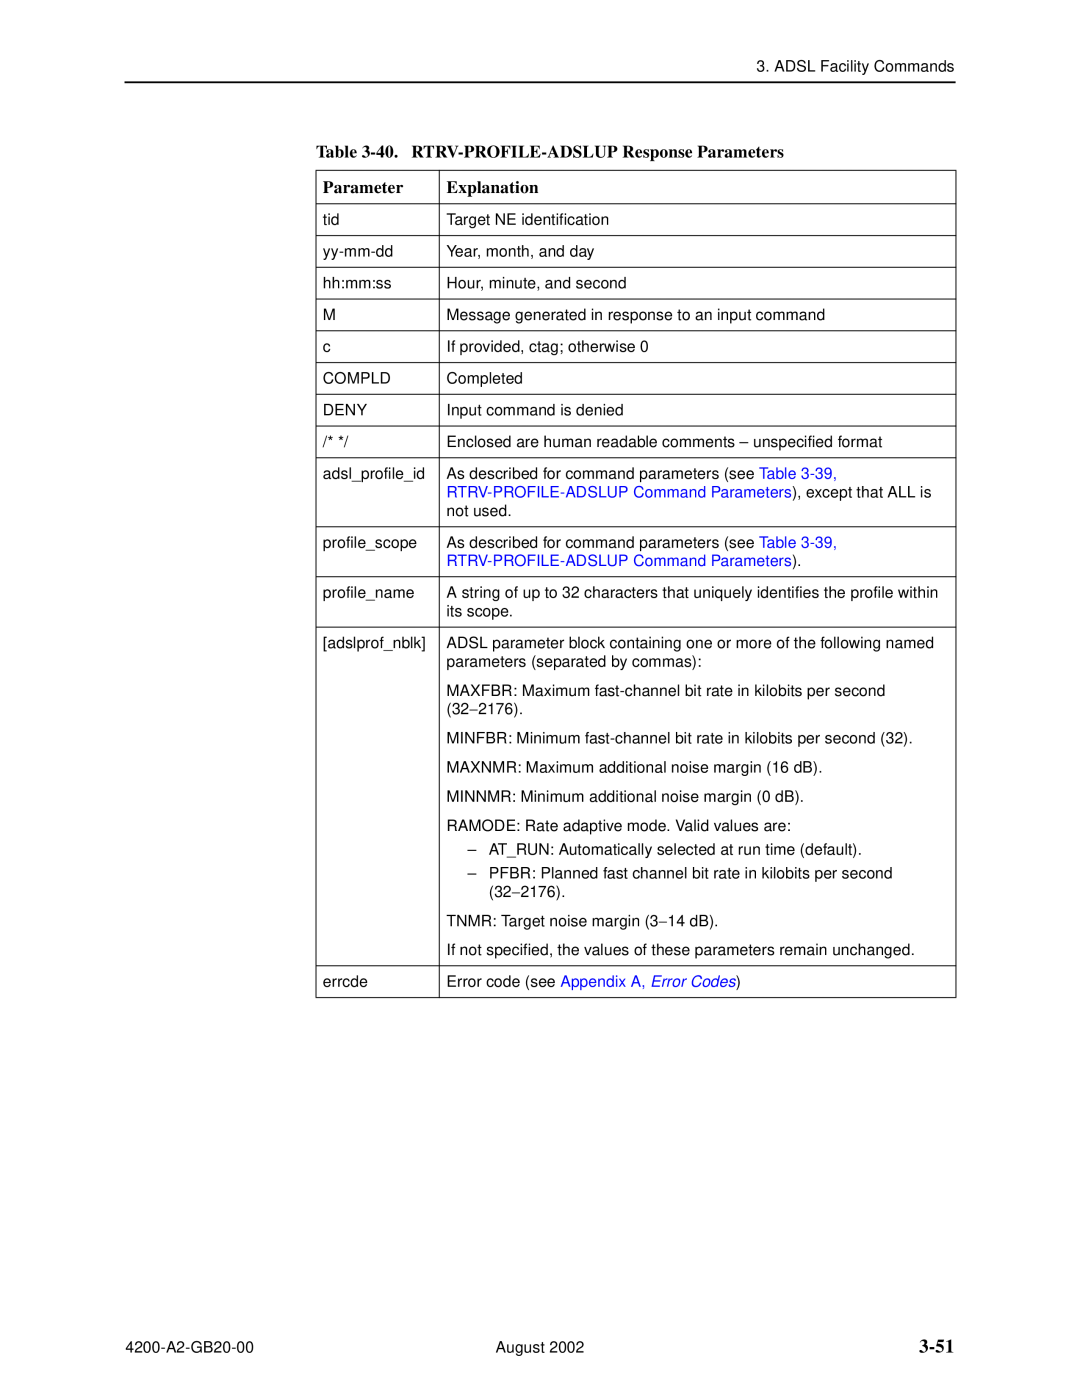 Paradyne 4200 manual 3-51, 40. RTRV-PROFILE-ADSLUP Response Parameters, Explanation, RTRV-PROFILE-ADSLUP Command Parameters 